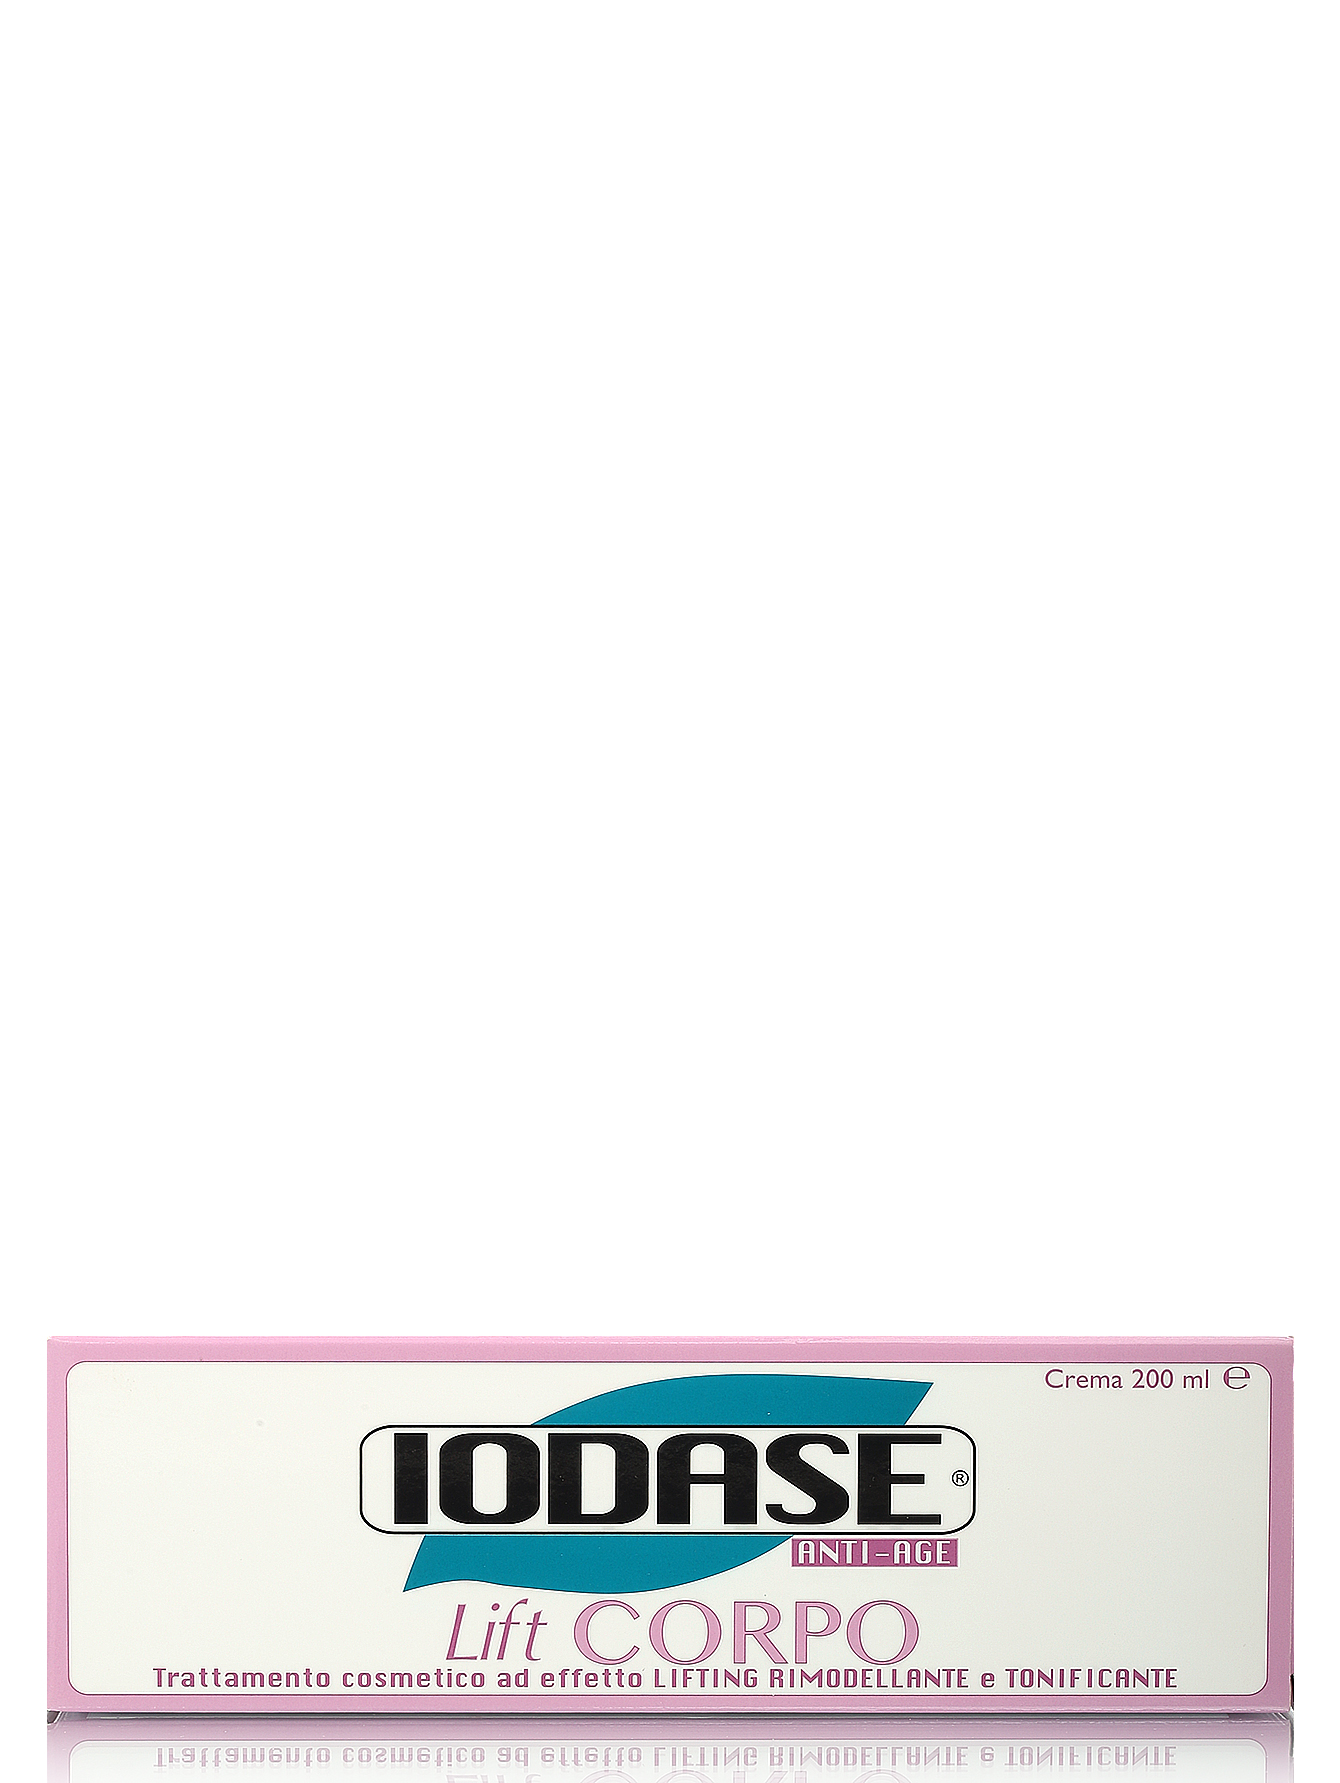  Крем для тела "Iodase lift corpo" - Body Care, 200ml - Модель Верх-Низ